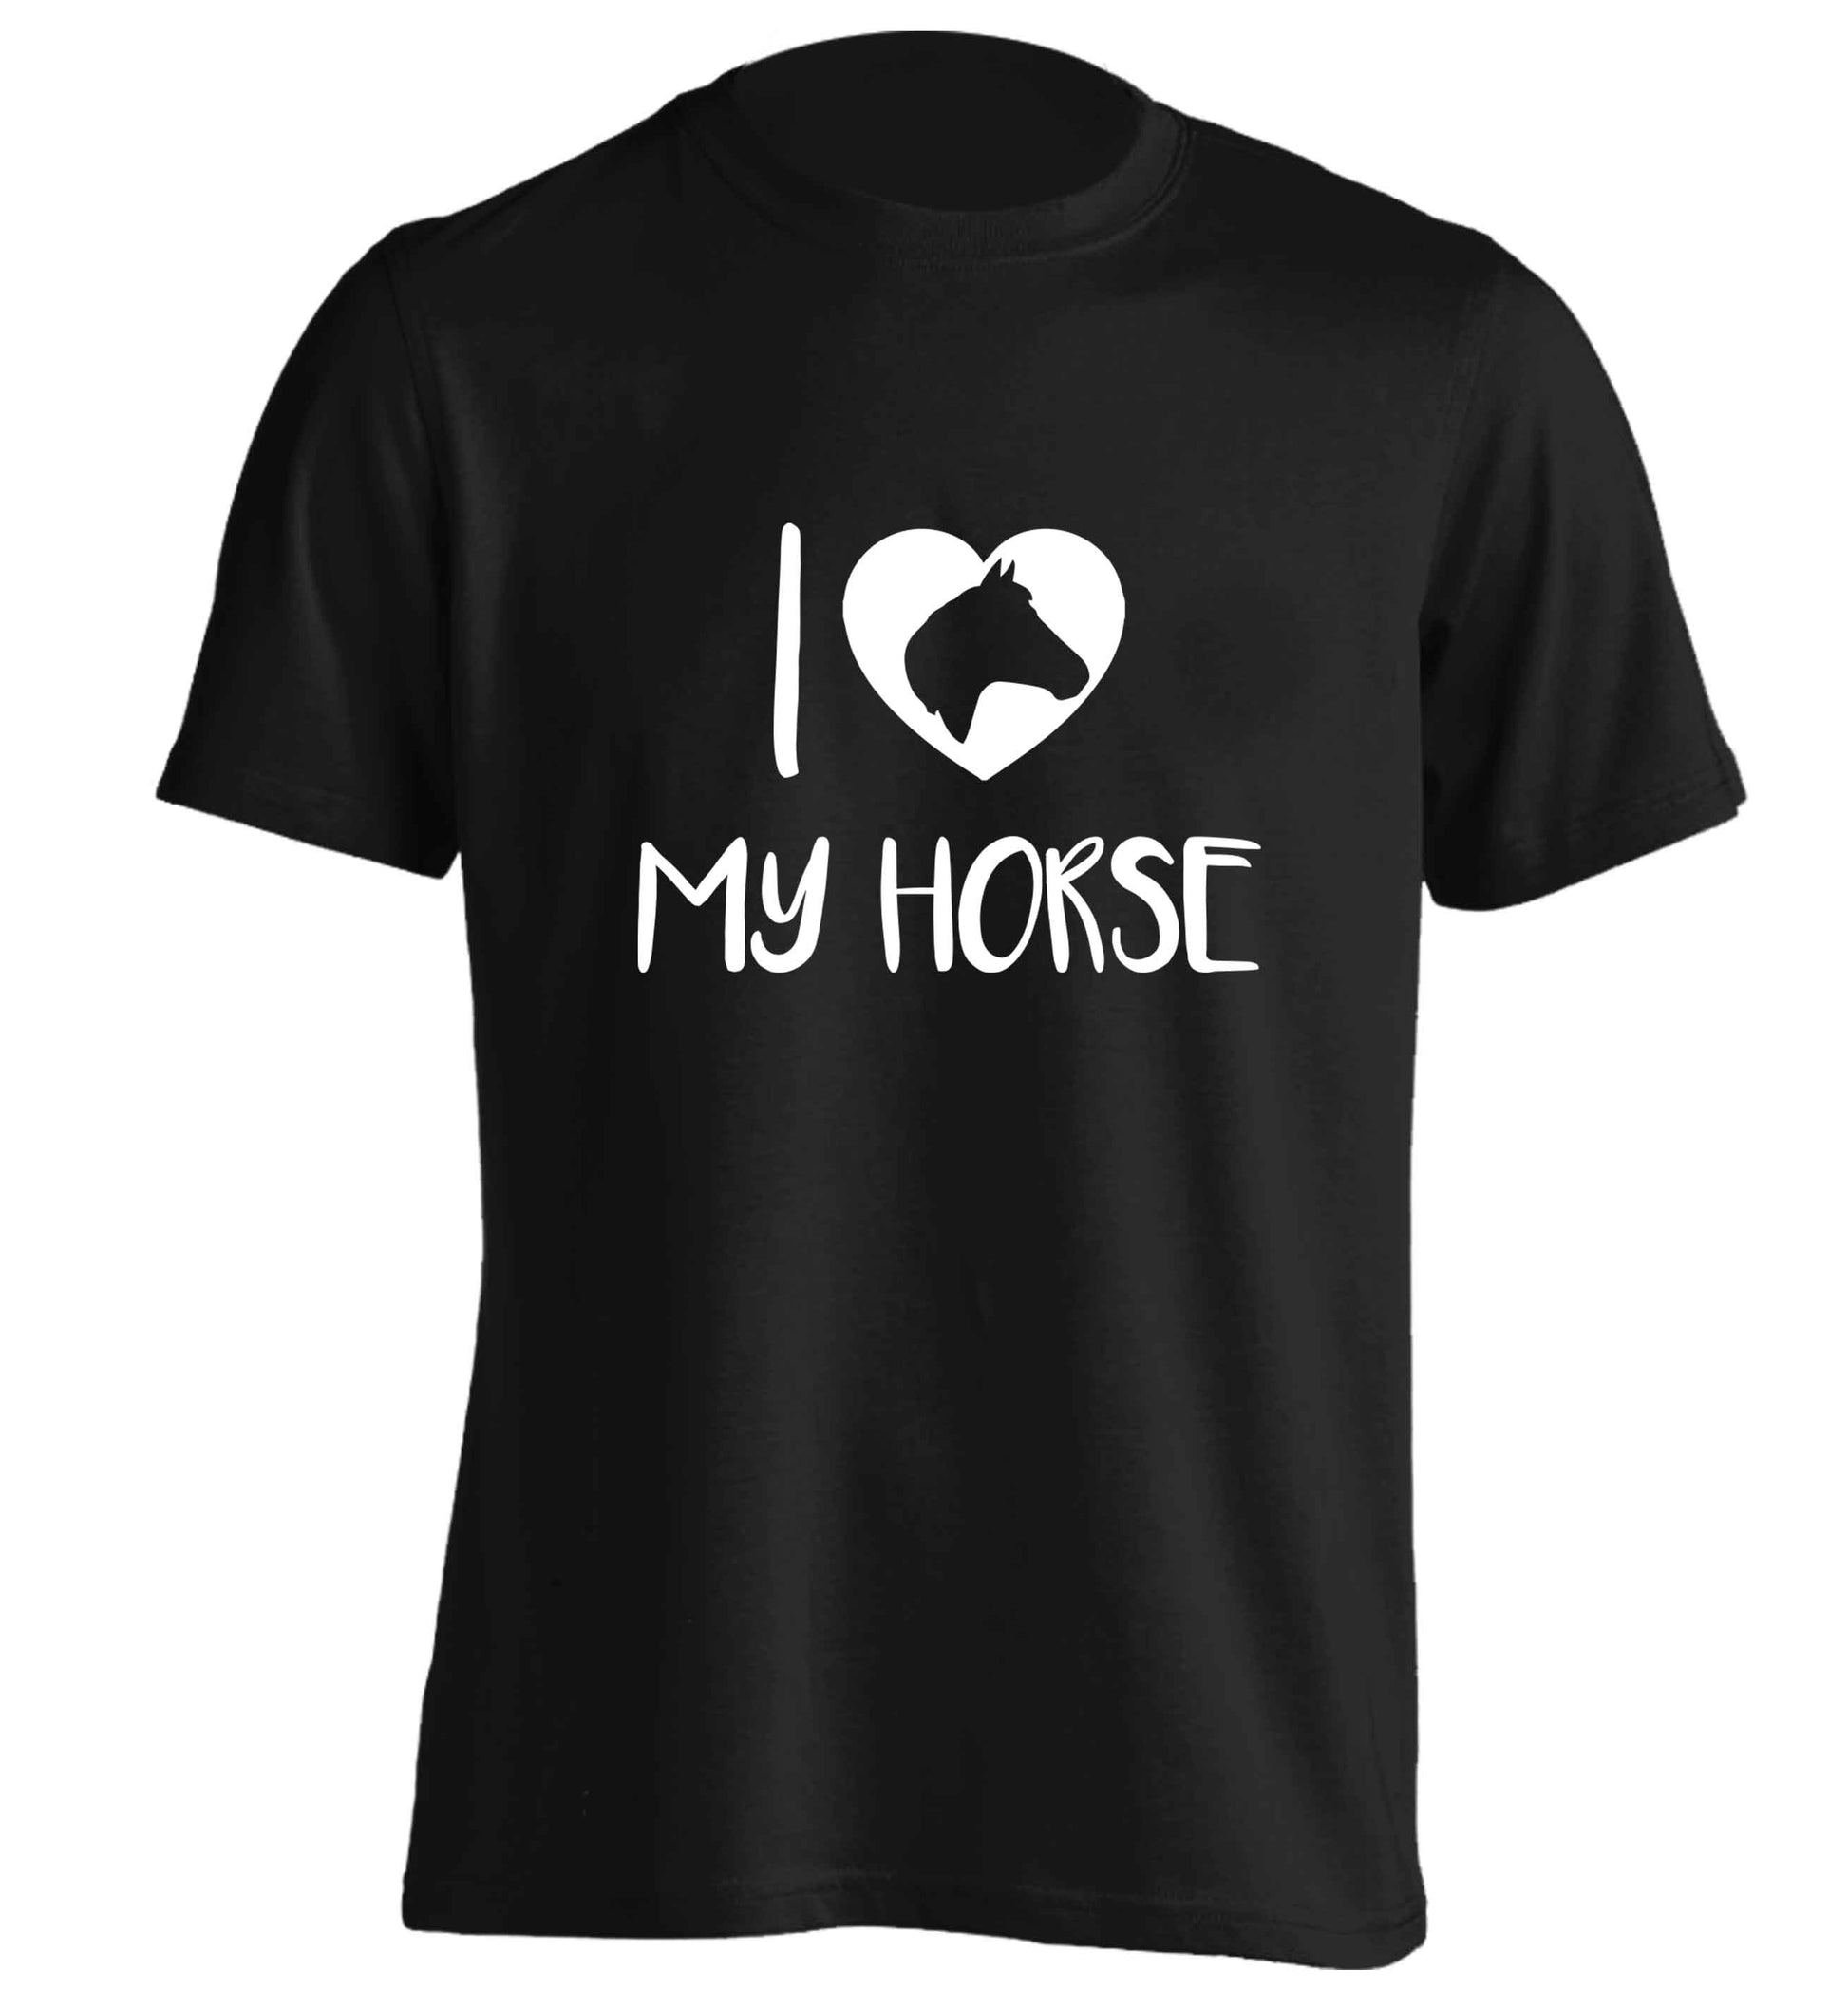 I love my horse adults unisex black Tshirt 2XL